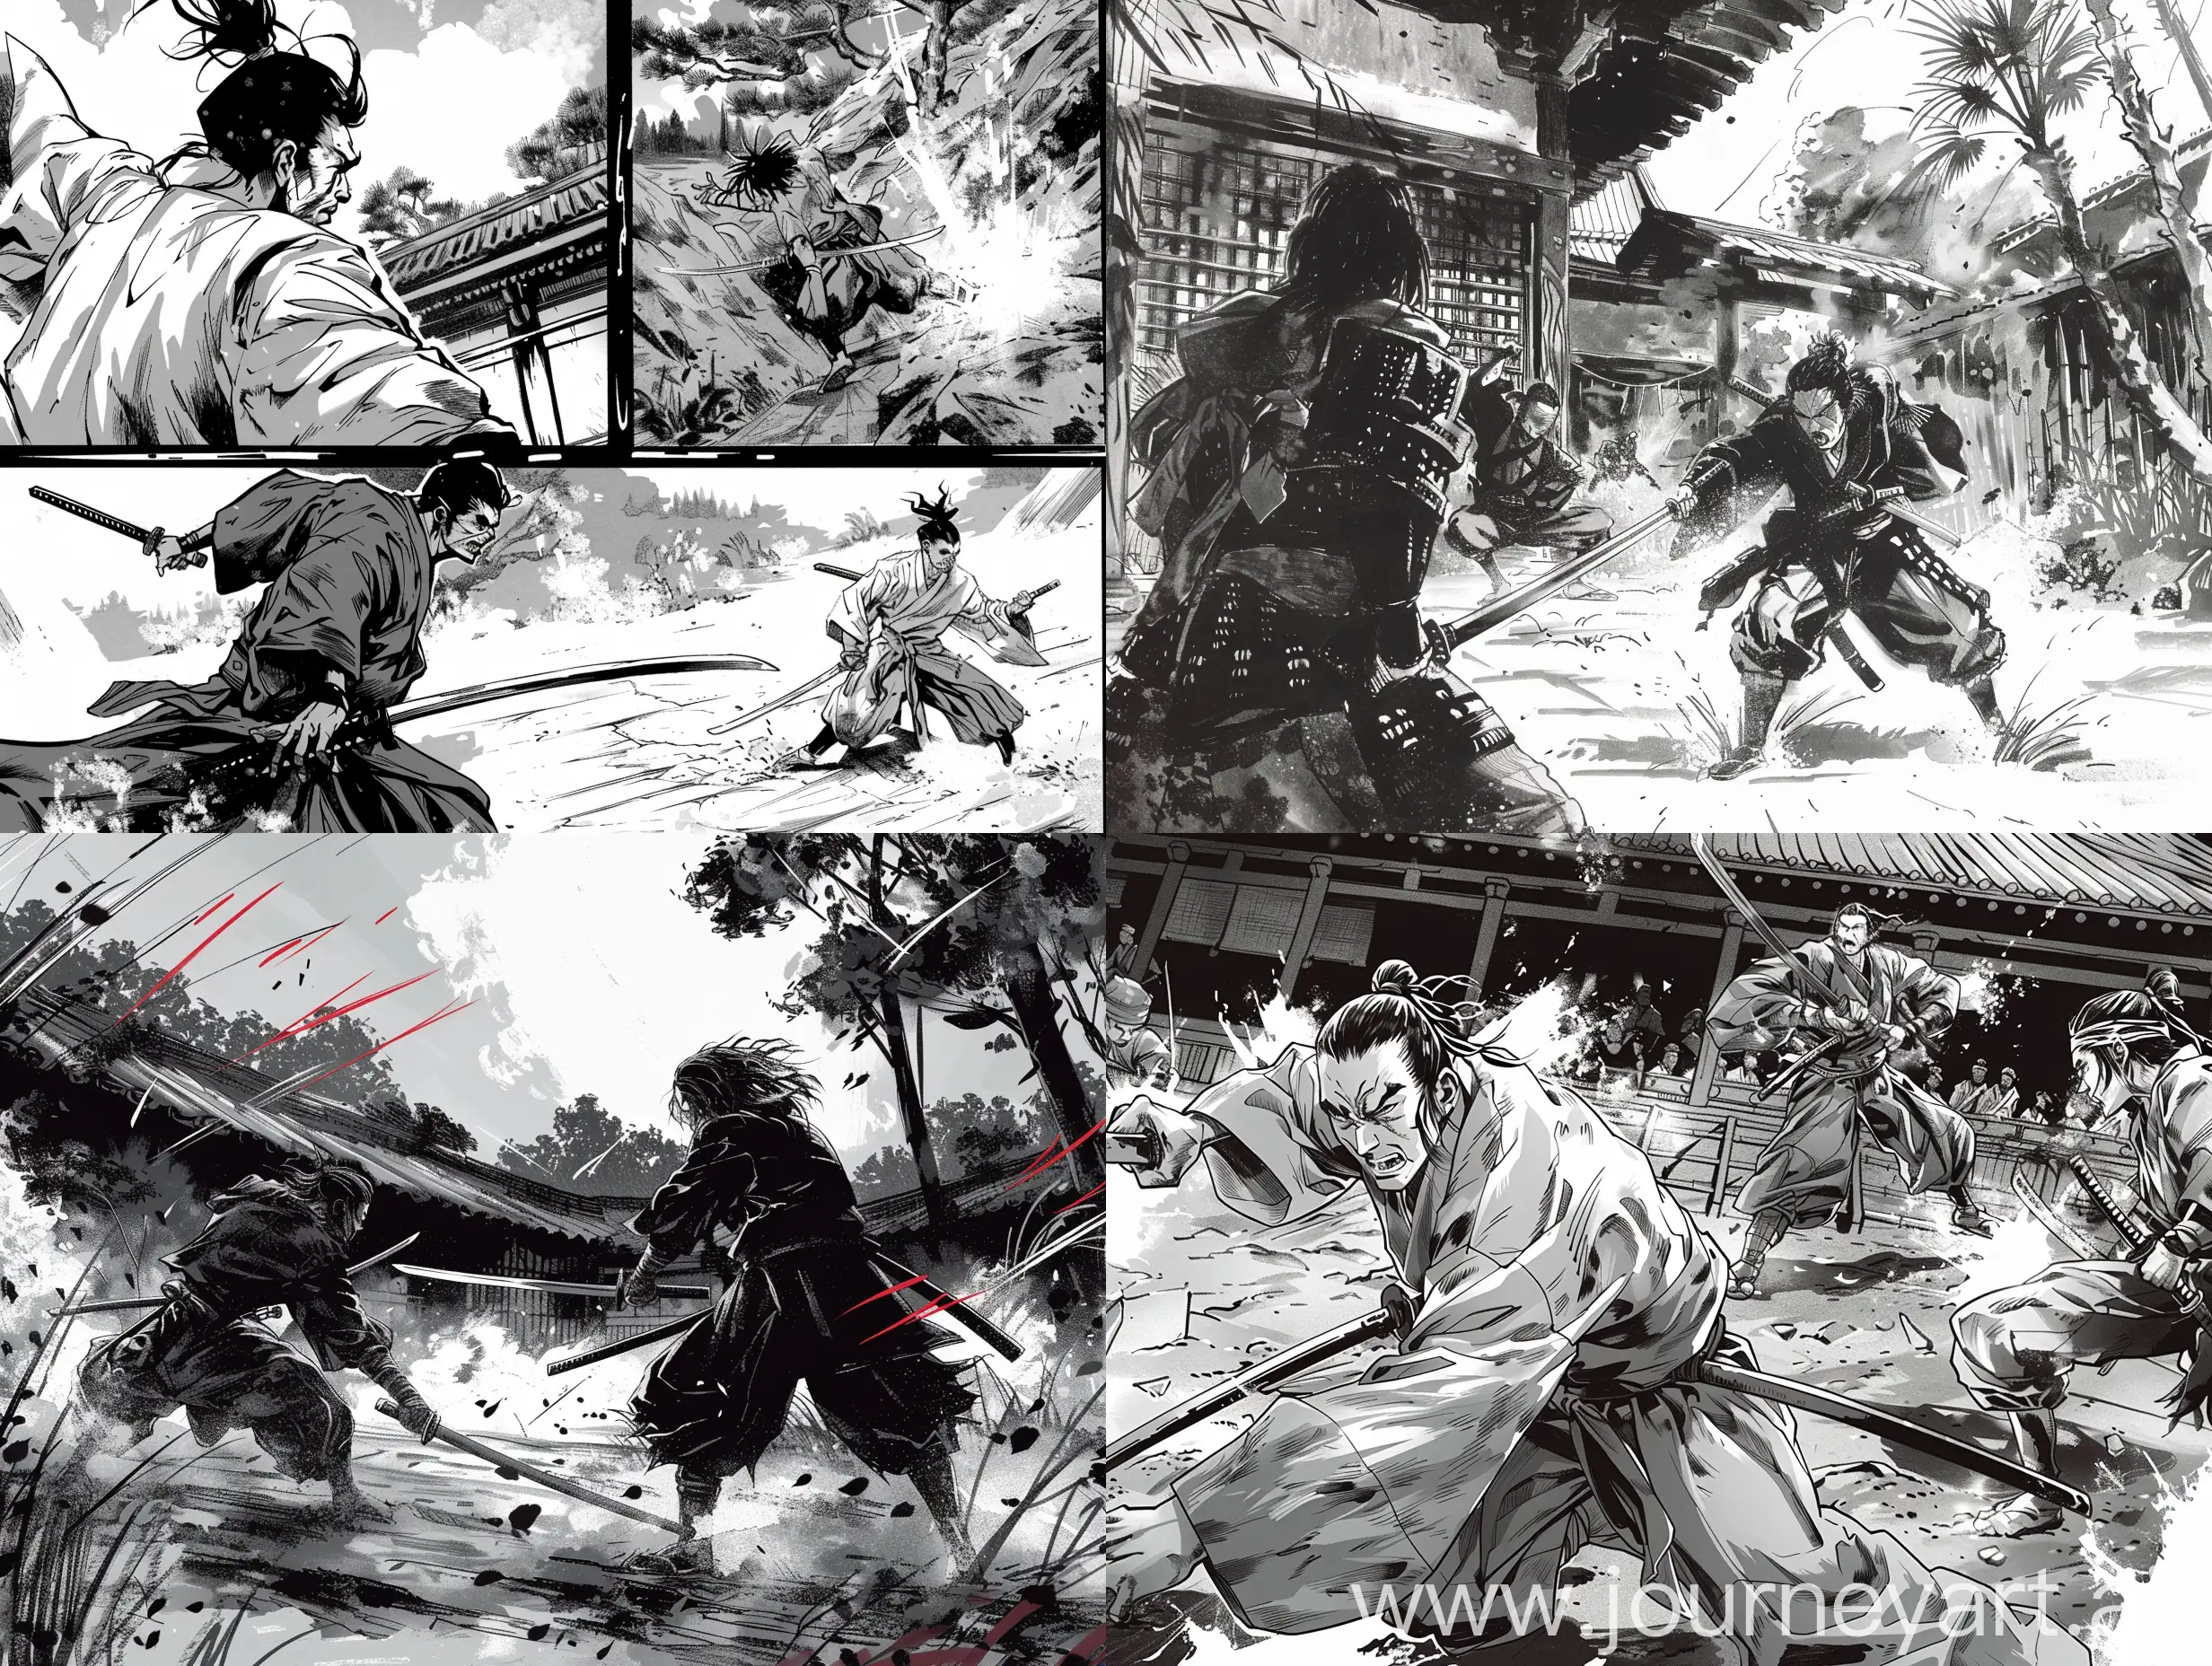 Epic-Samurai-vs-Ninja-Battle-in-Manga-Panel